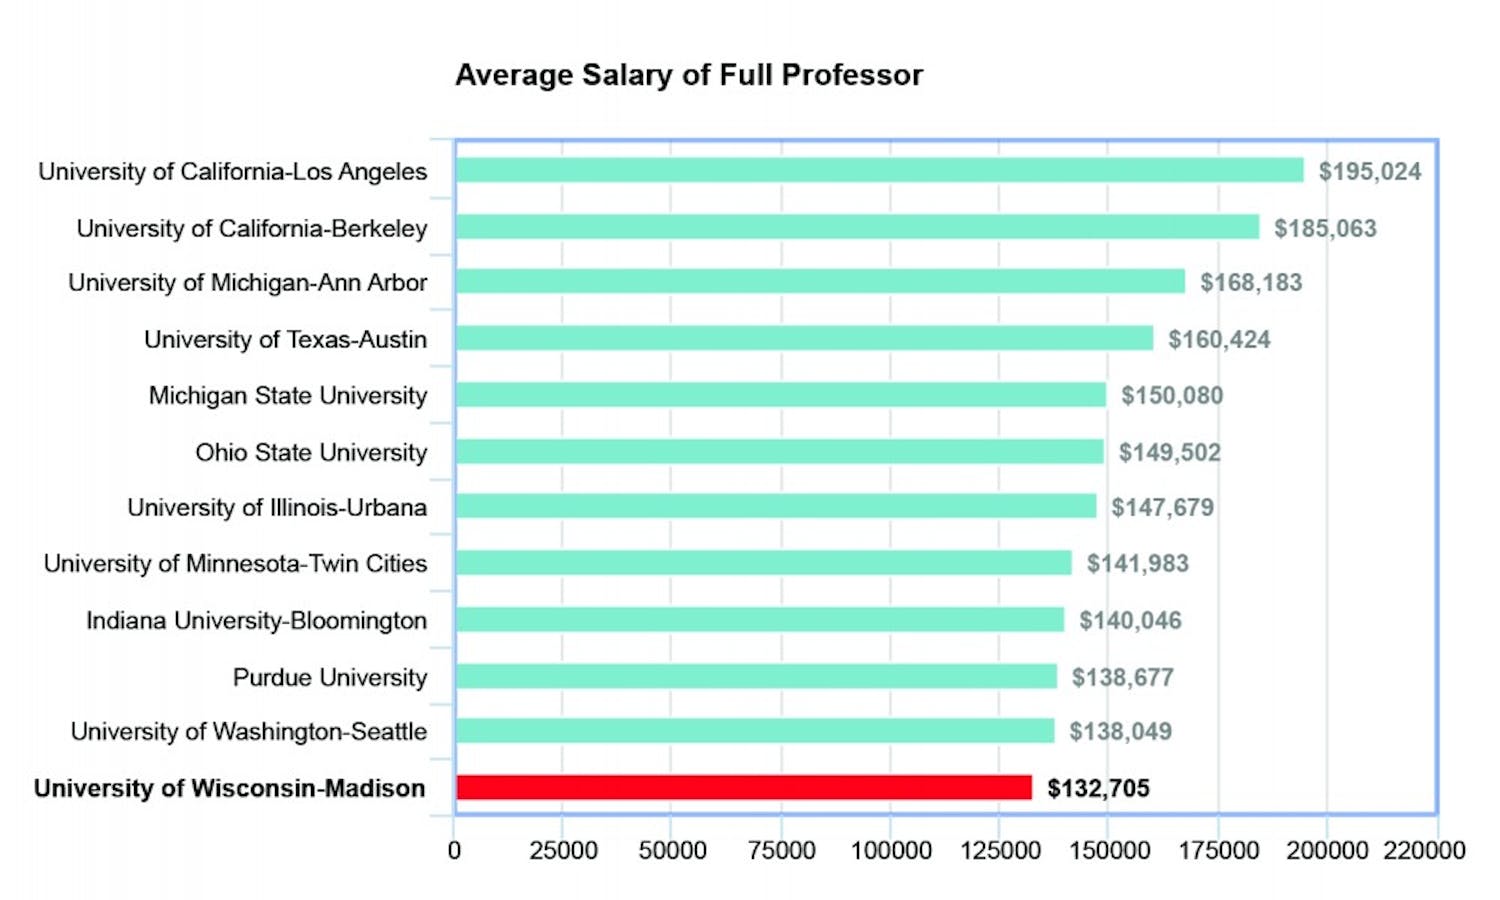 Teaching inequality: Despite wage increase, UW-Madison professors still underpaid